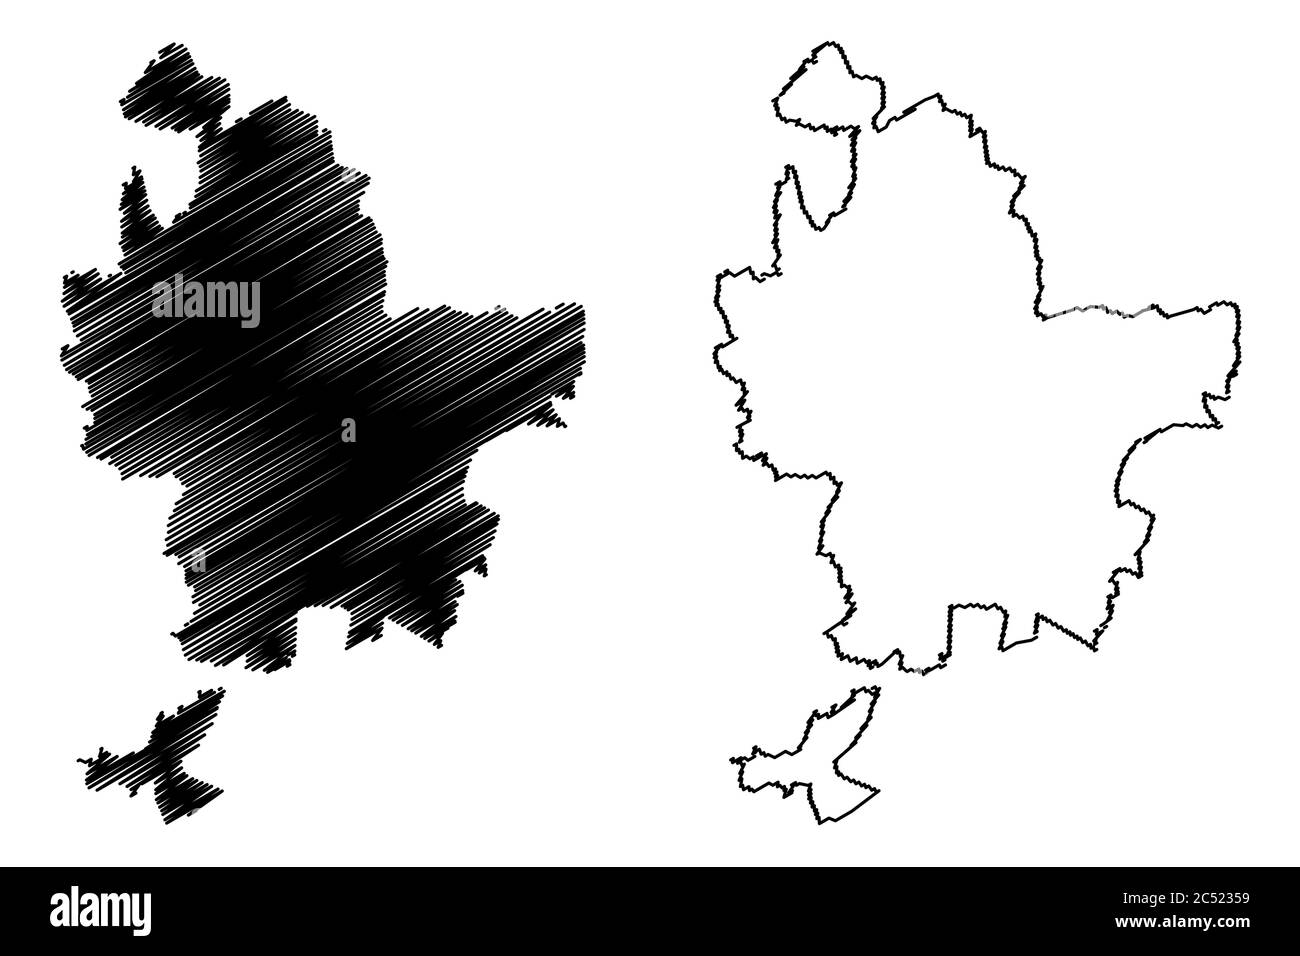 Lyon Metropolis Department (Frankreich, Französische Republik, Auvergne-Rhone-Alpes Region, ARA) Karte Vektorgrafik, Skizze Scribble Grand Lyon Karte Stock Vektor